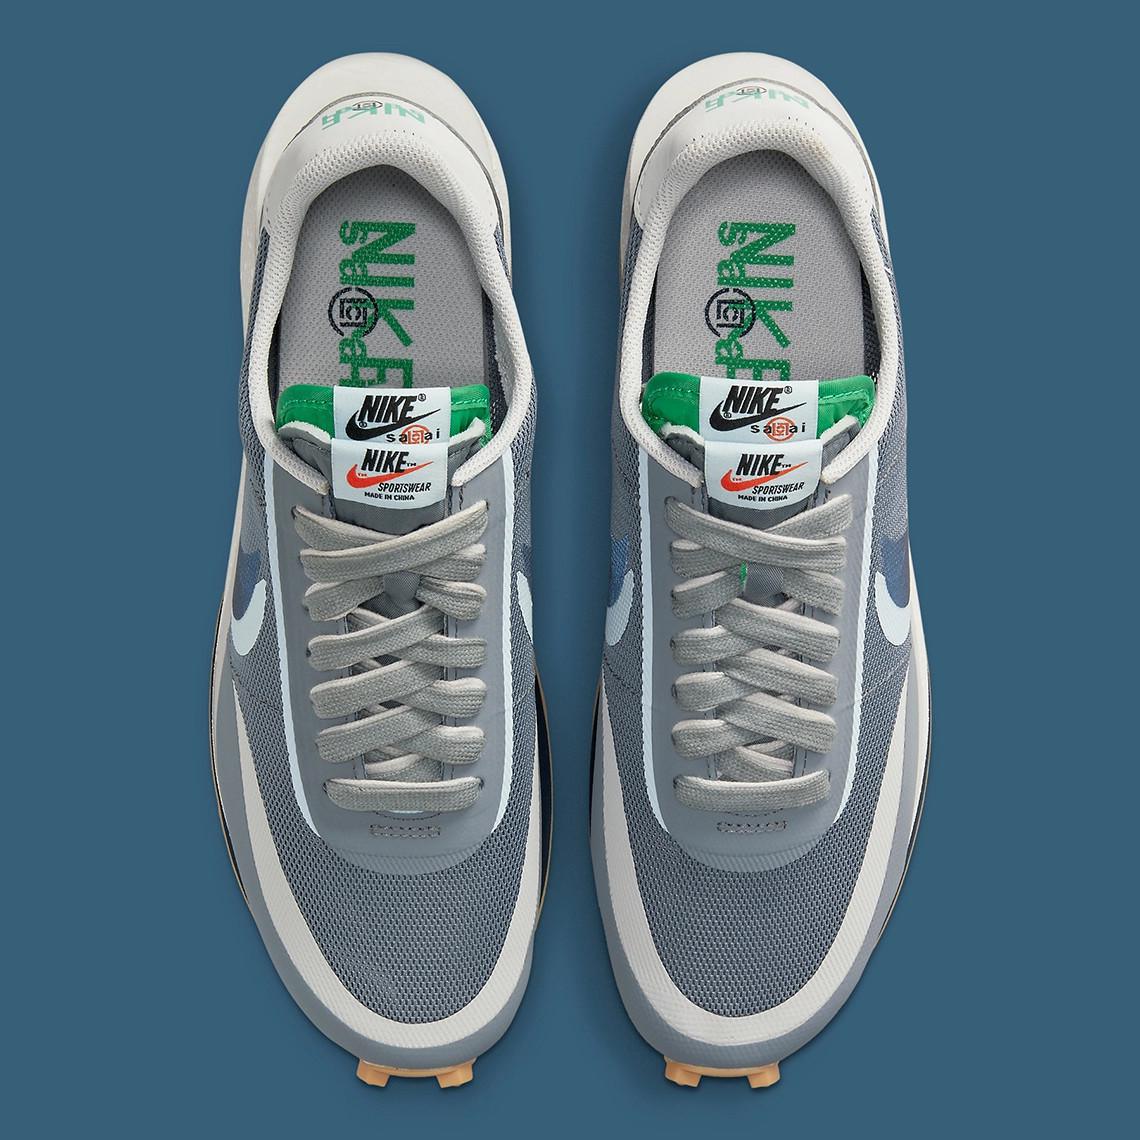 CLOT x sacai x Nike LDWaffle “Cool Grey”